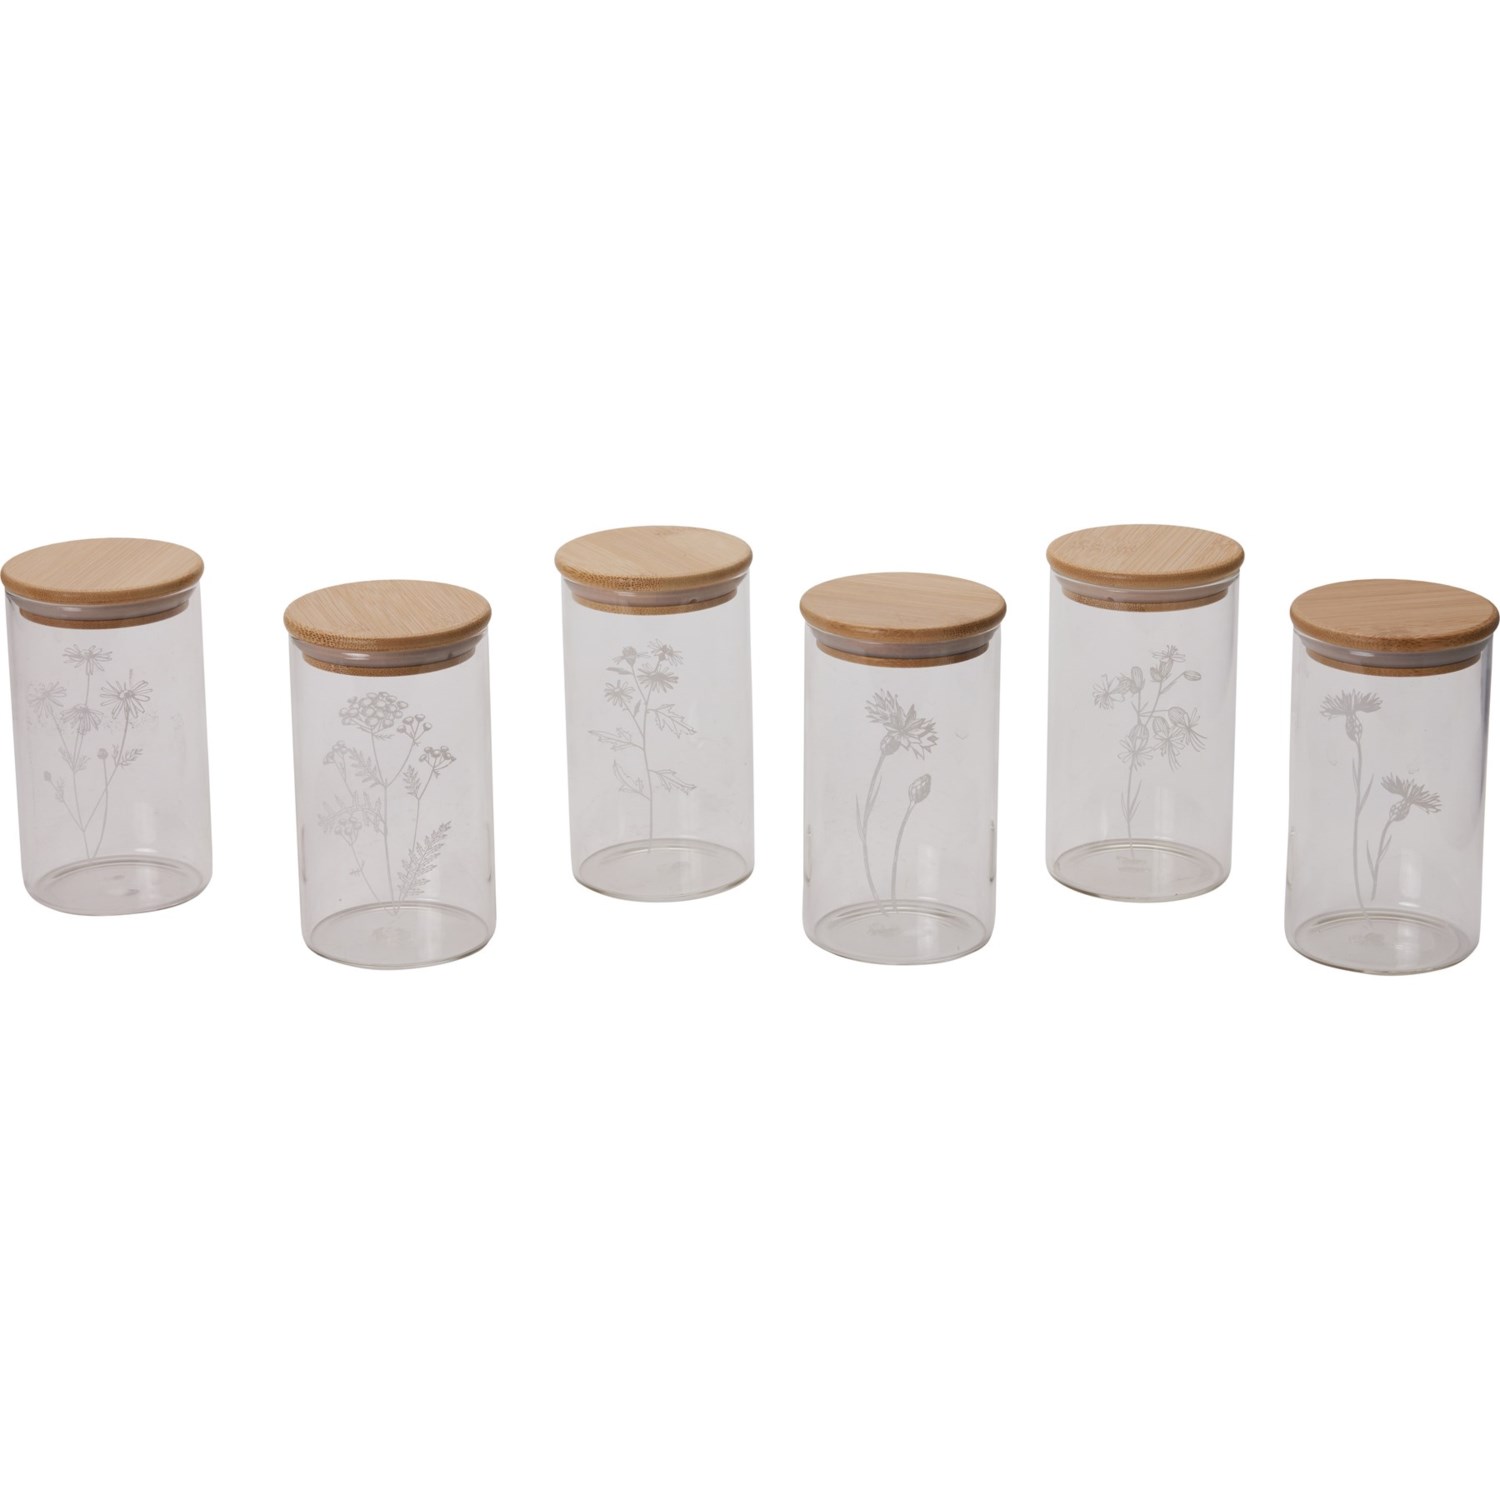 FOODY Wildflower Glass Storage Jars - 6-Pack, 10 oz. - Save 35%